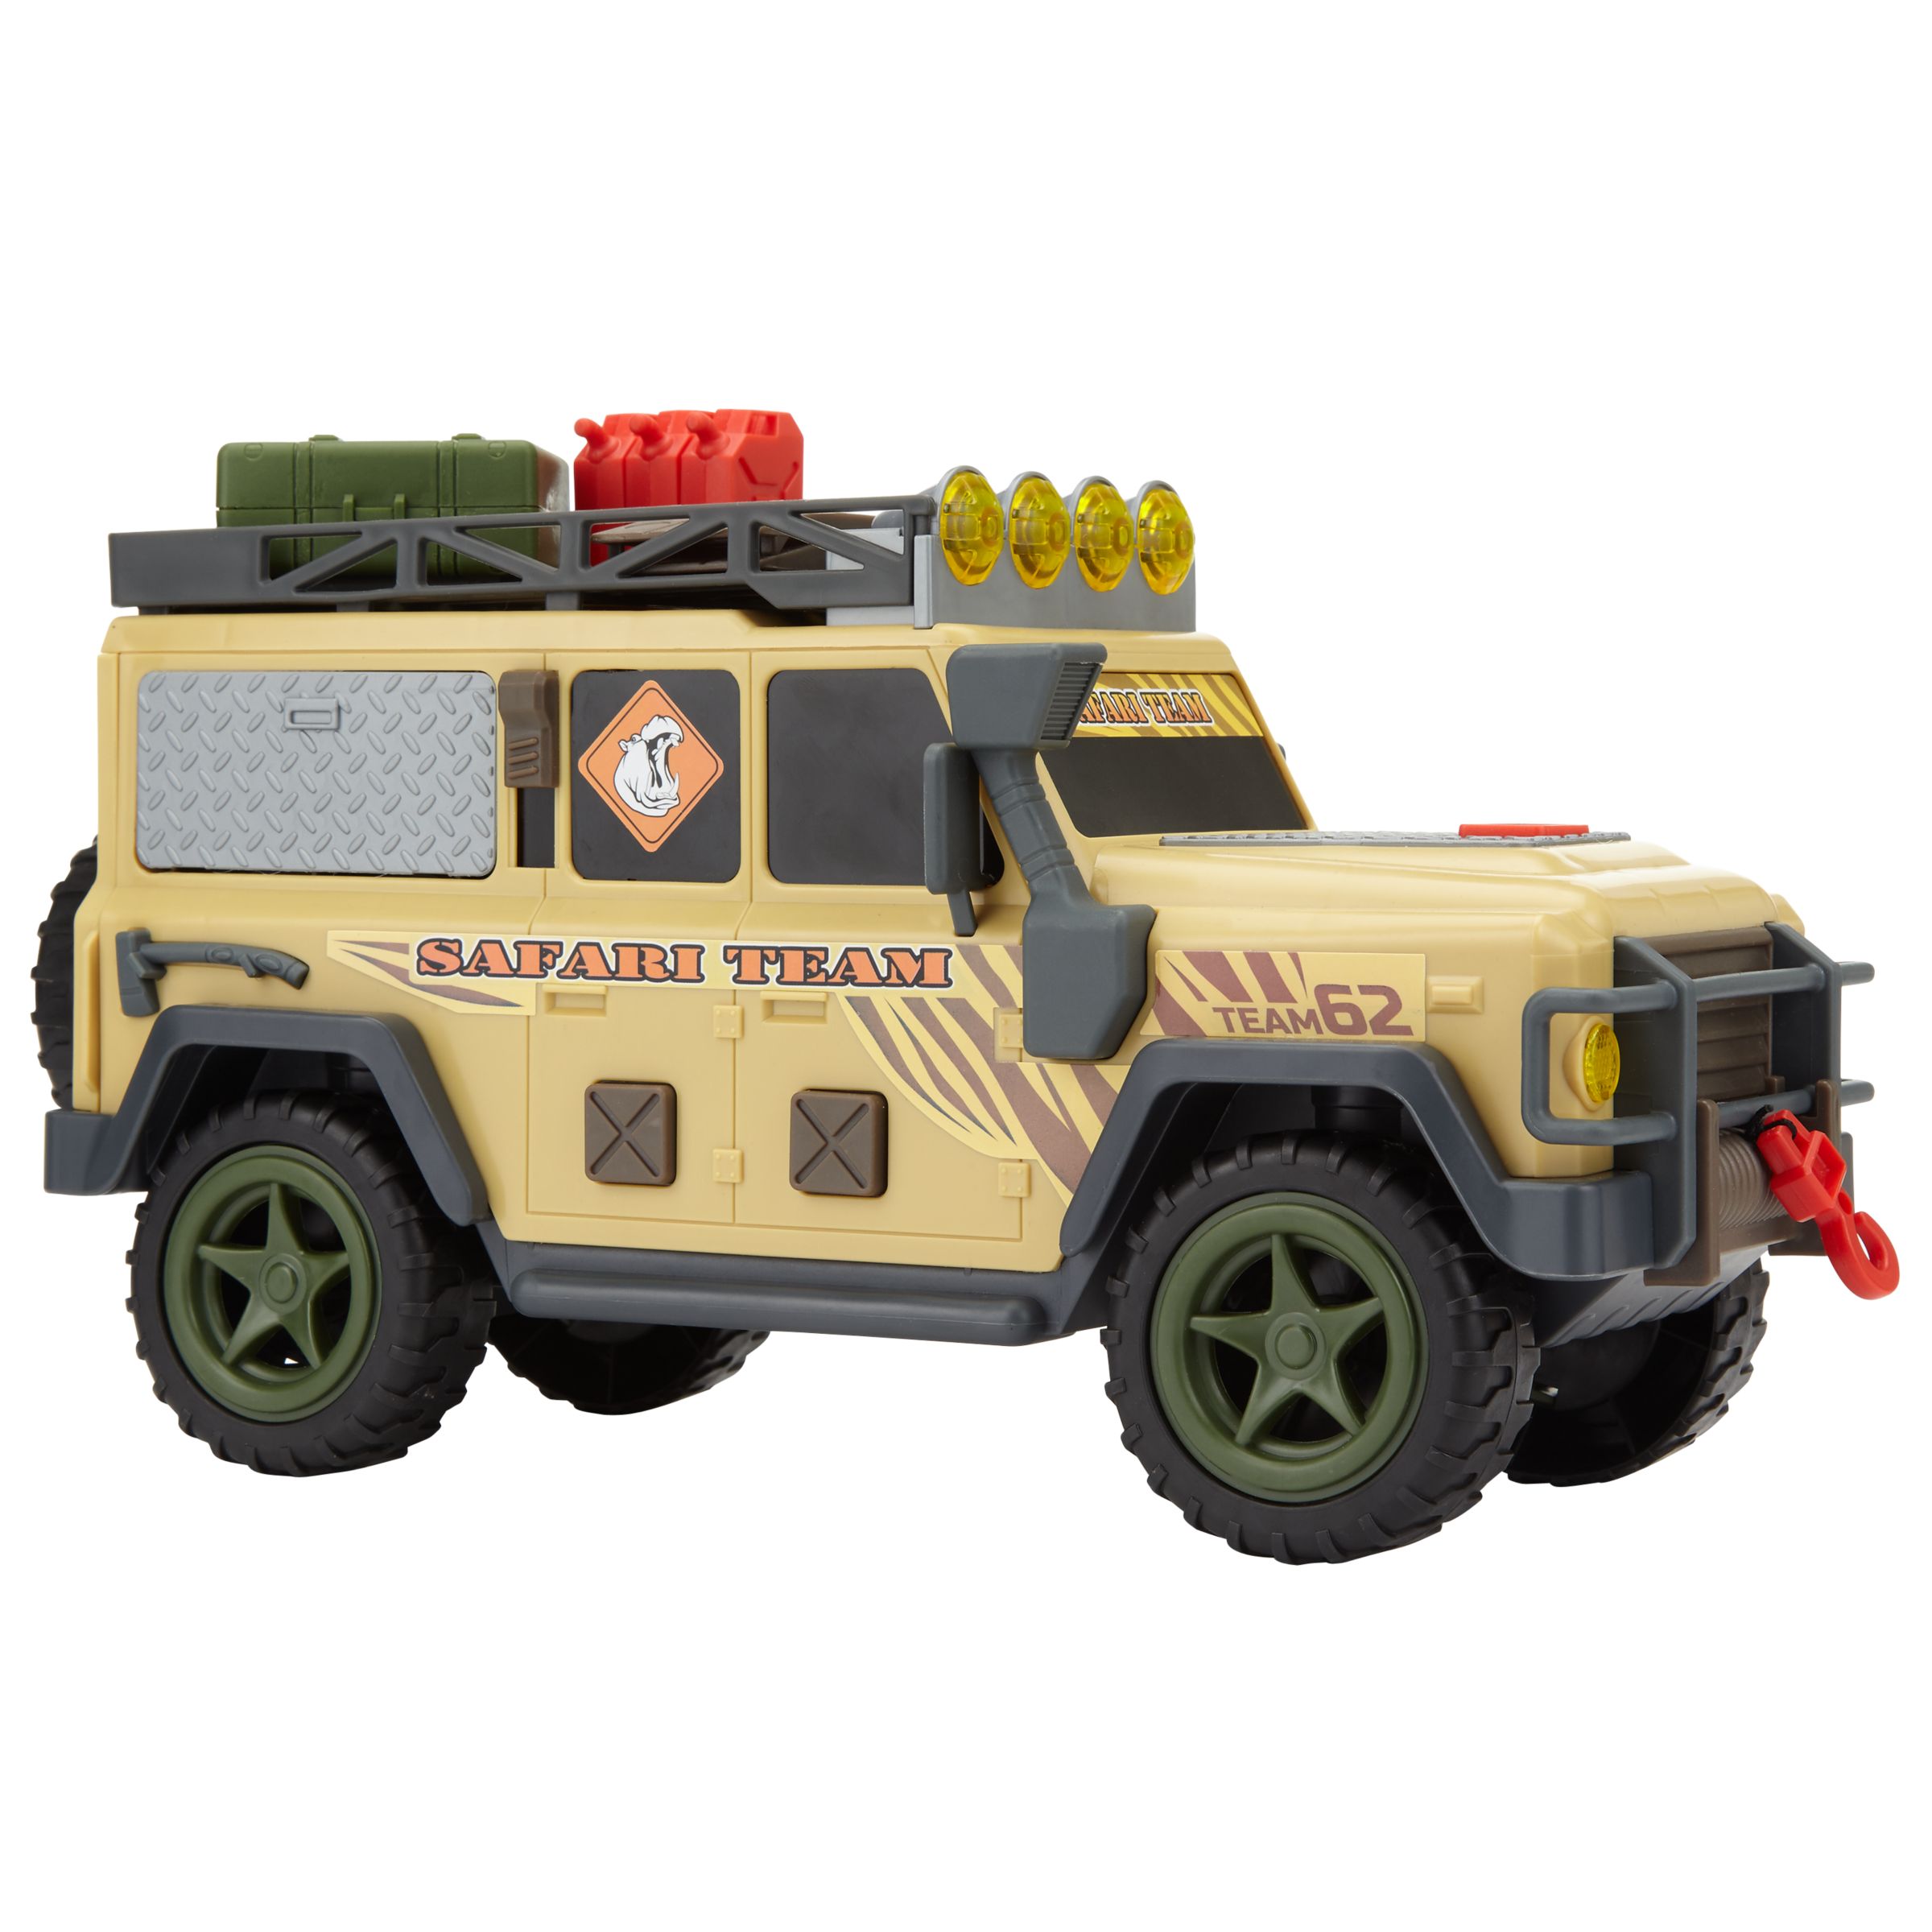 safari truck toy